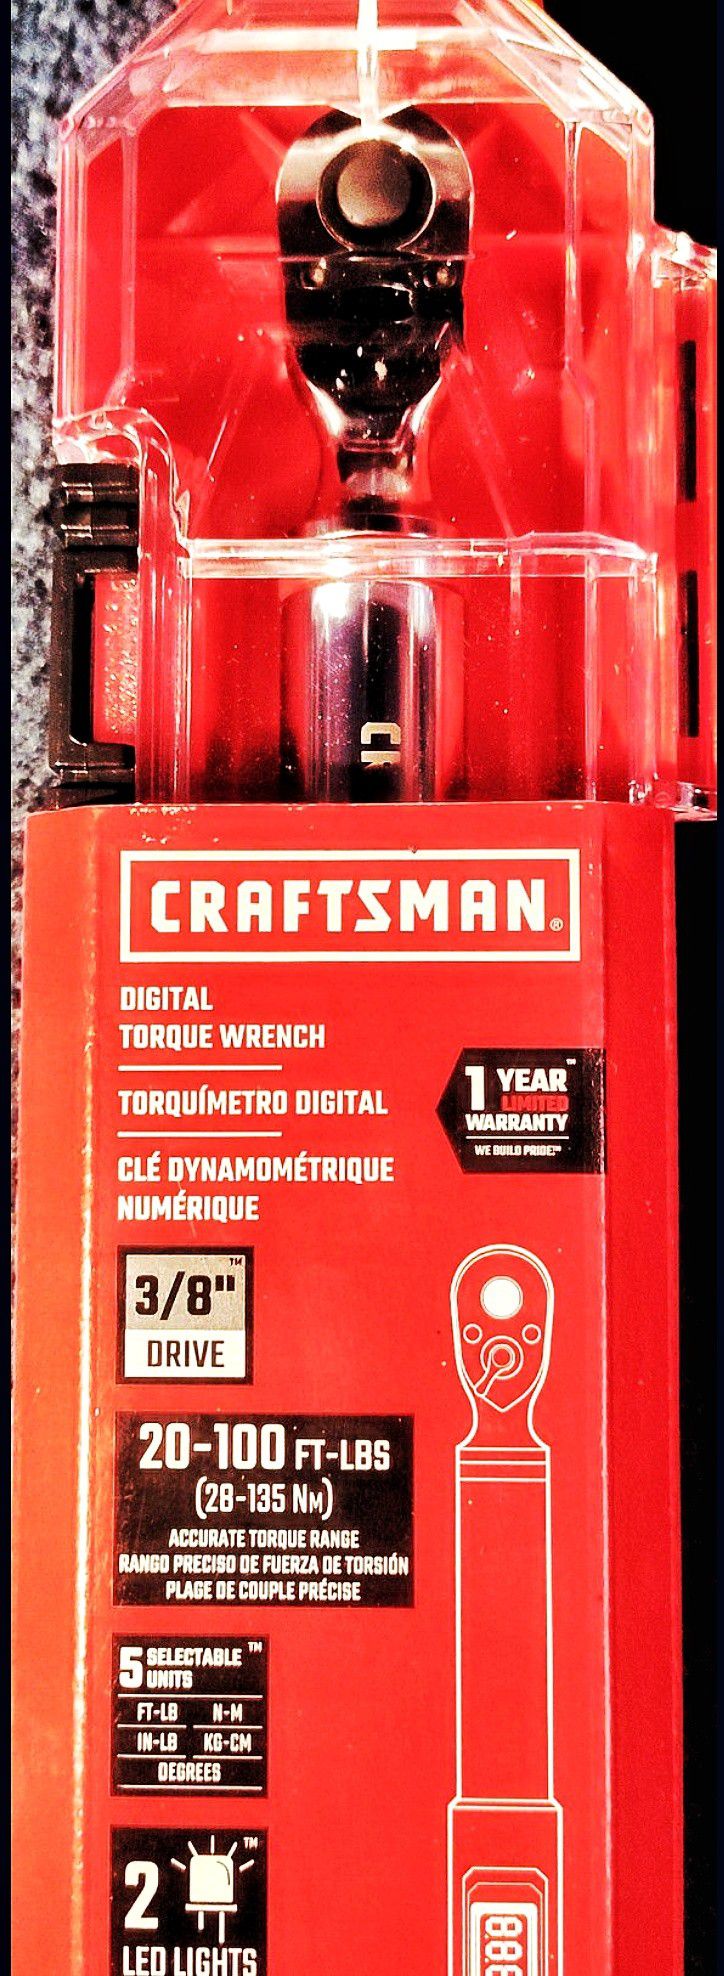 Craftsman 3/8" Drive Micrometer Torque Wrench (CMMT99433) 